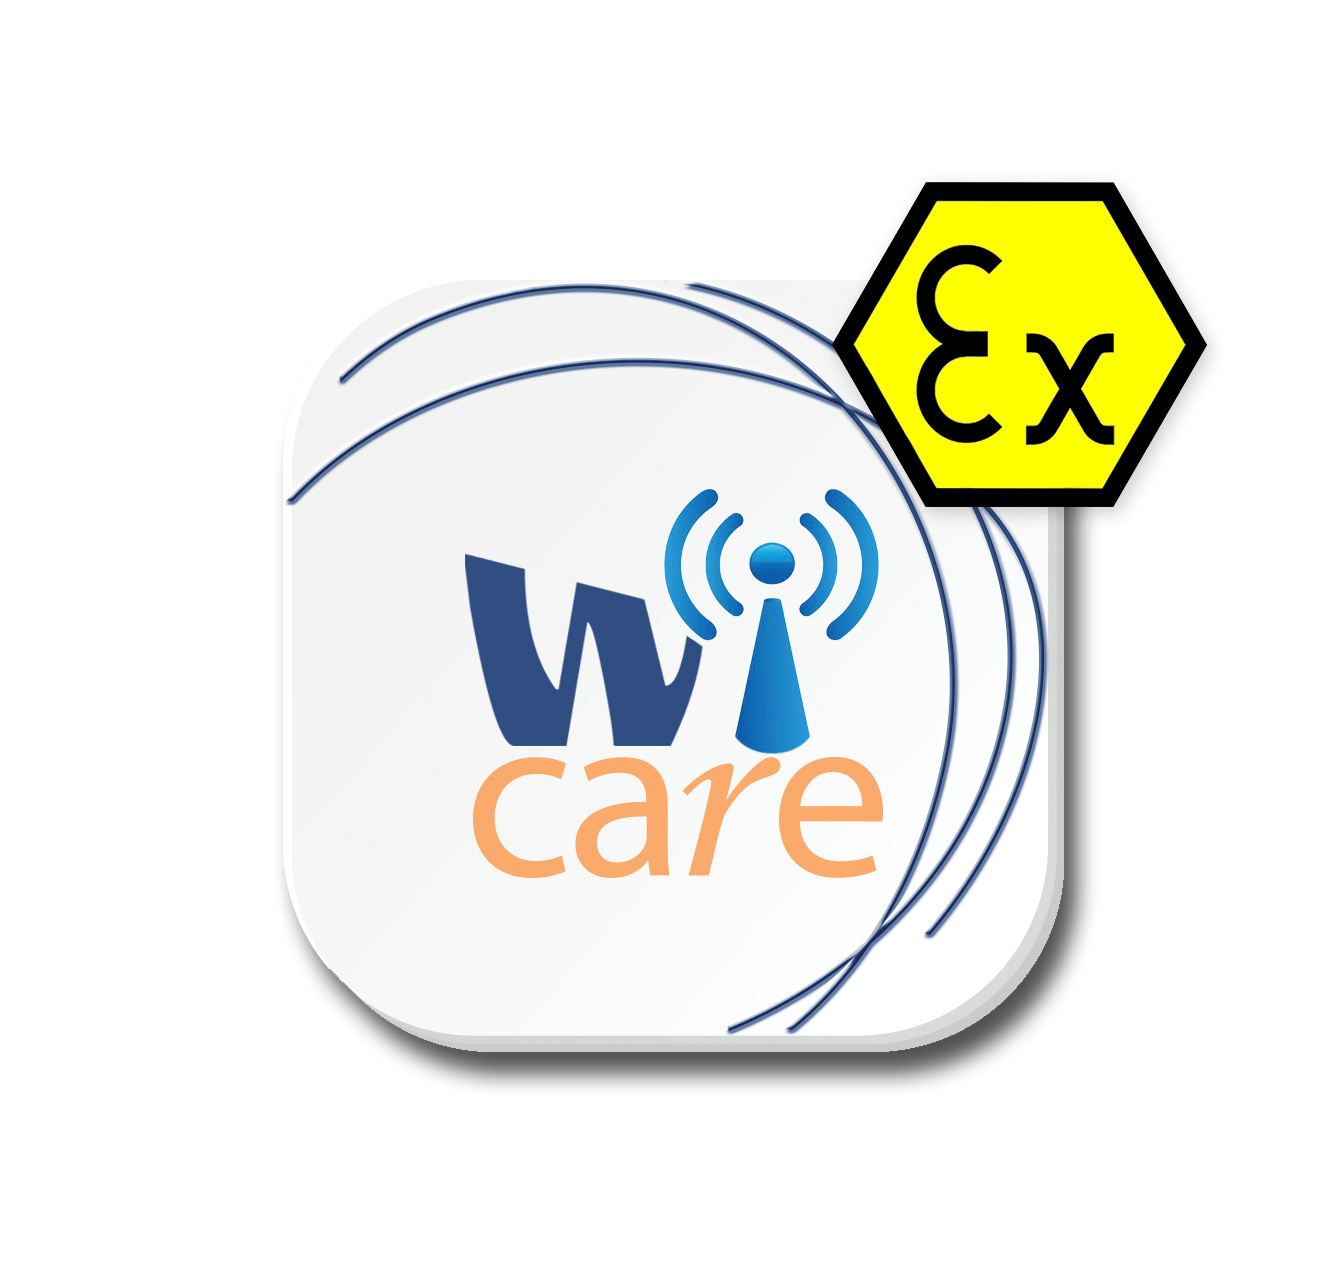 Wi-care_logo-Atex-b65c17